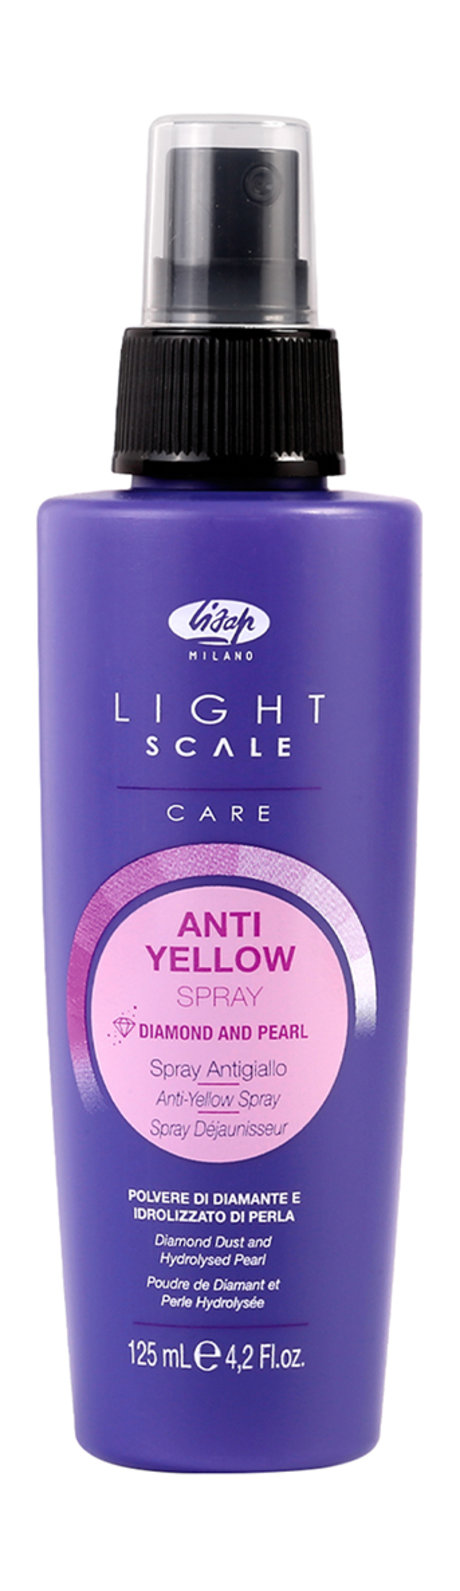 lisap milano light scale care anti yellow spray